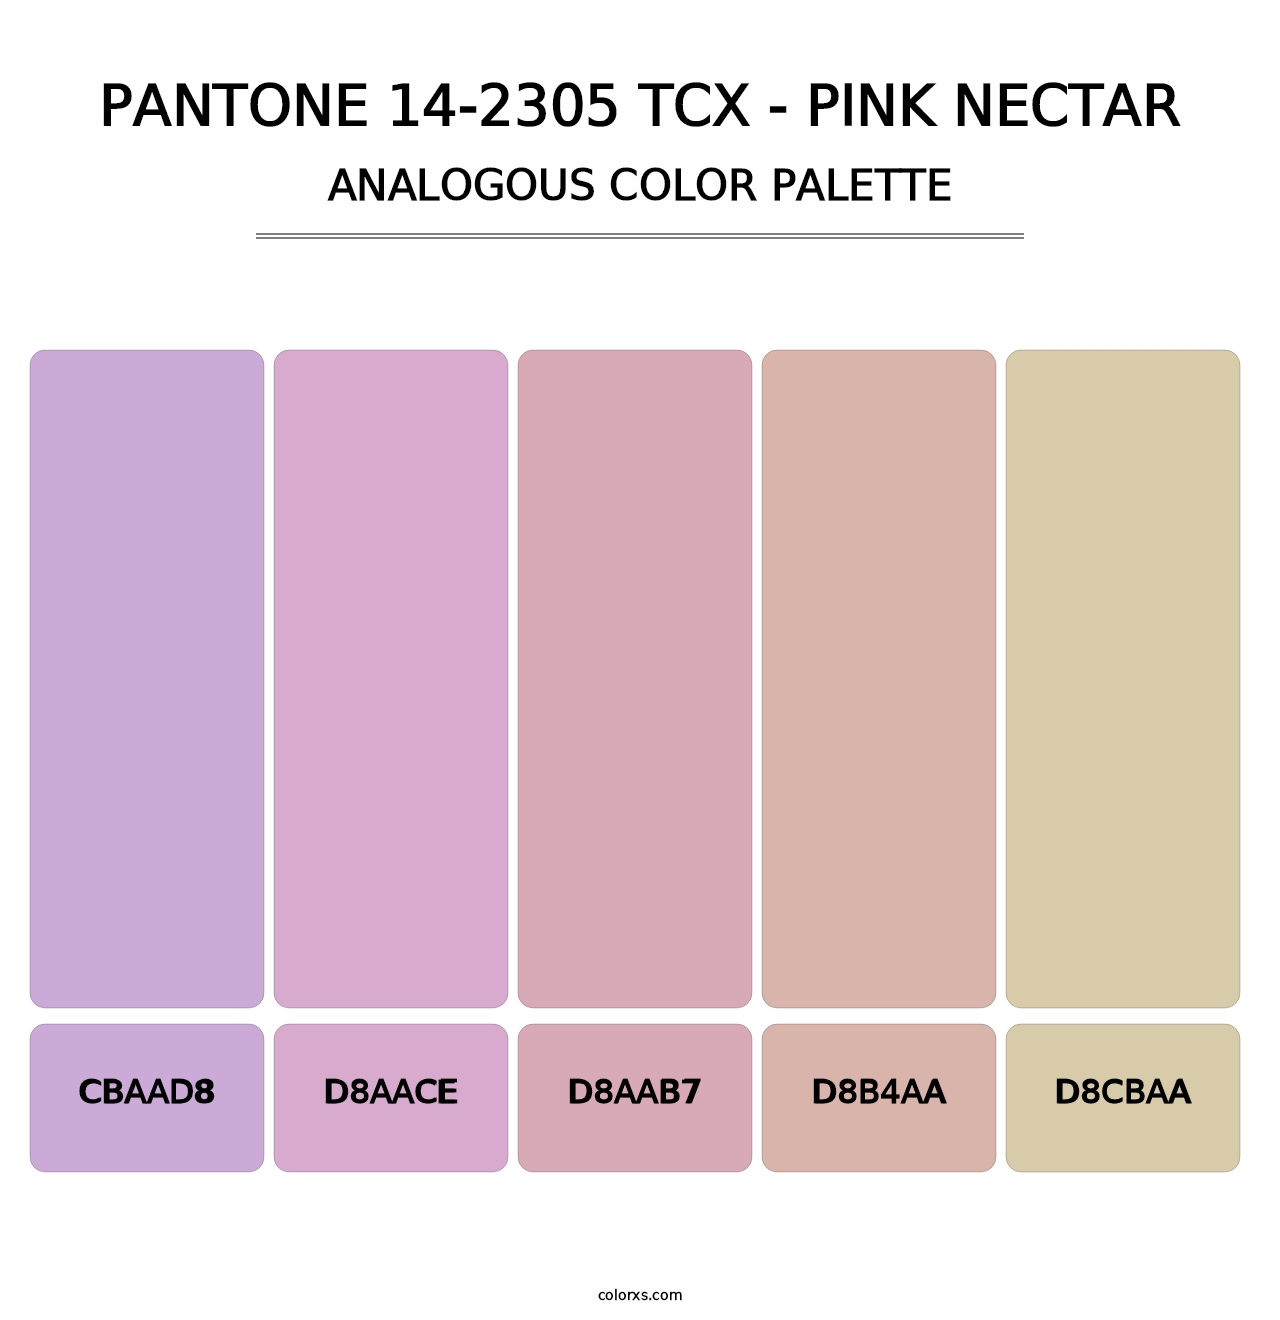 PANTONE 14-2305 TCX - Pink Nectar - Analogous Color Palette